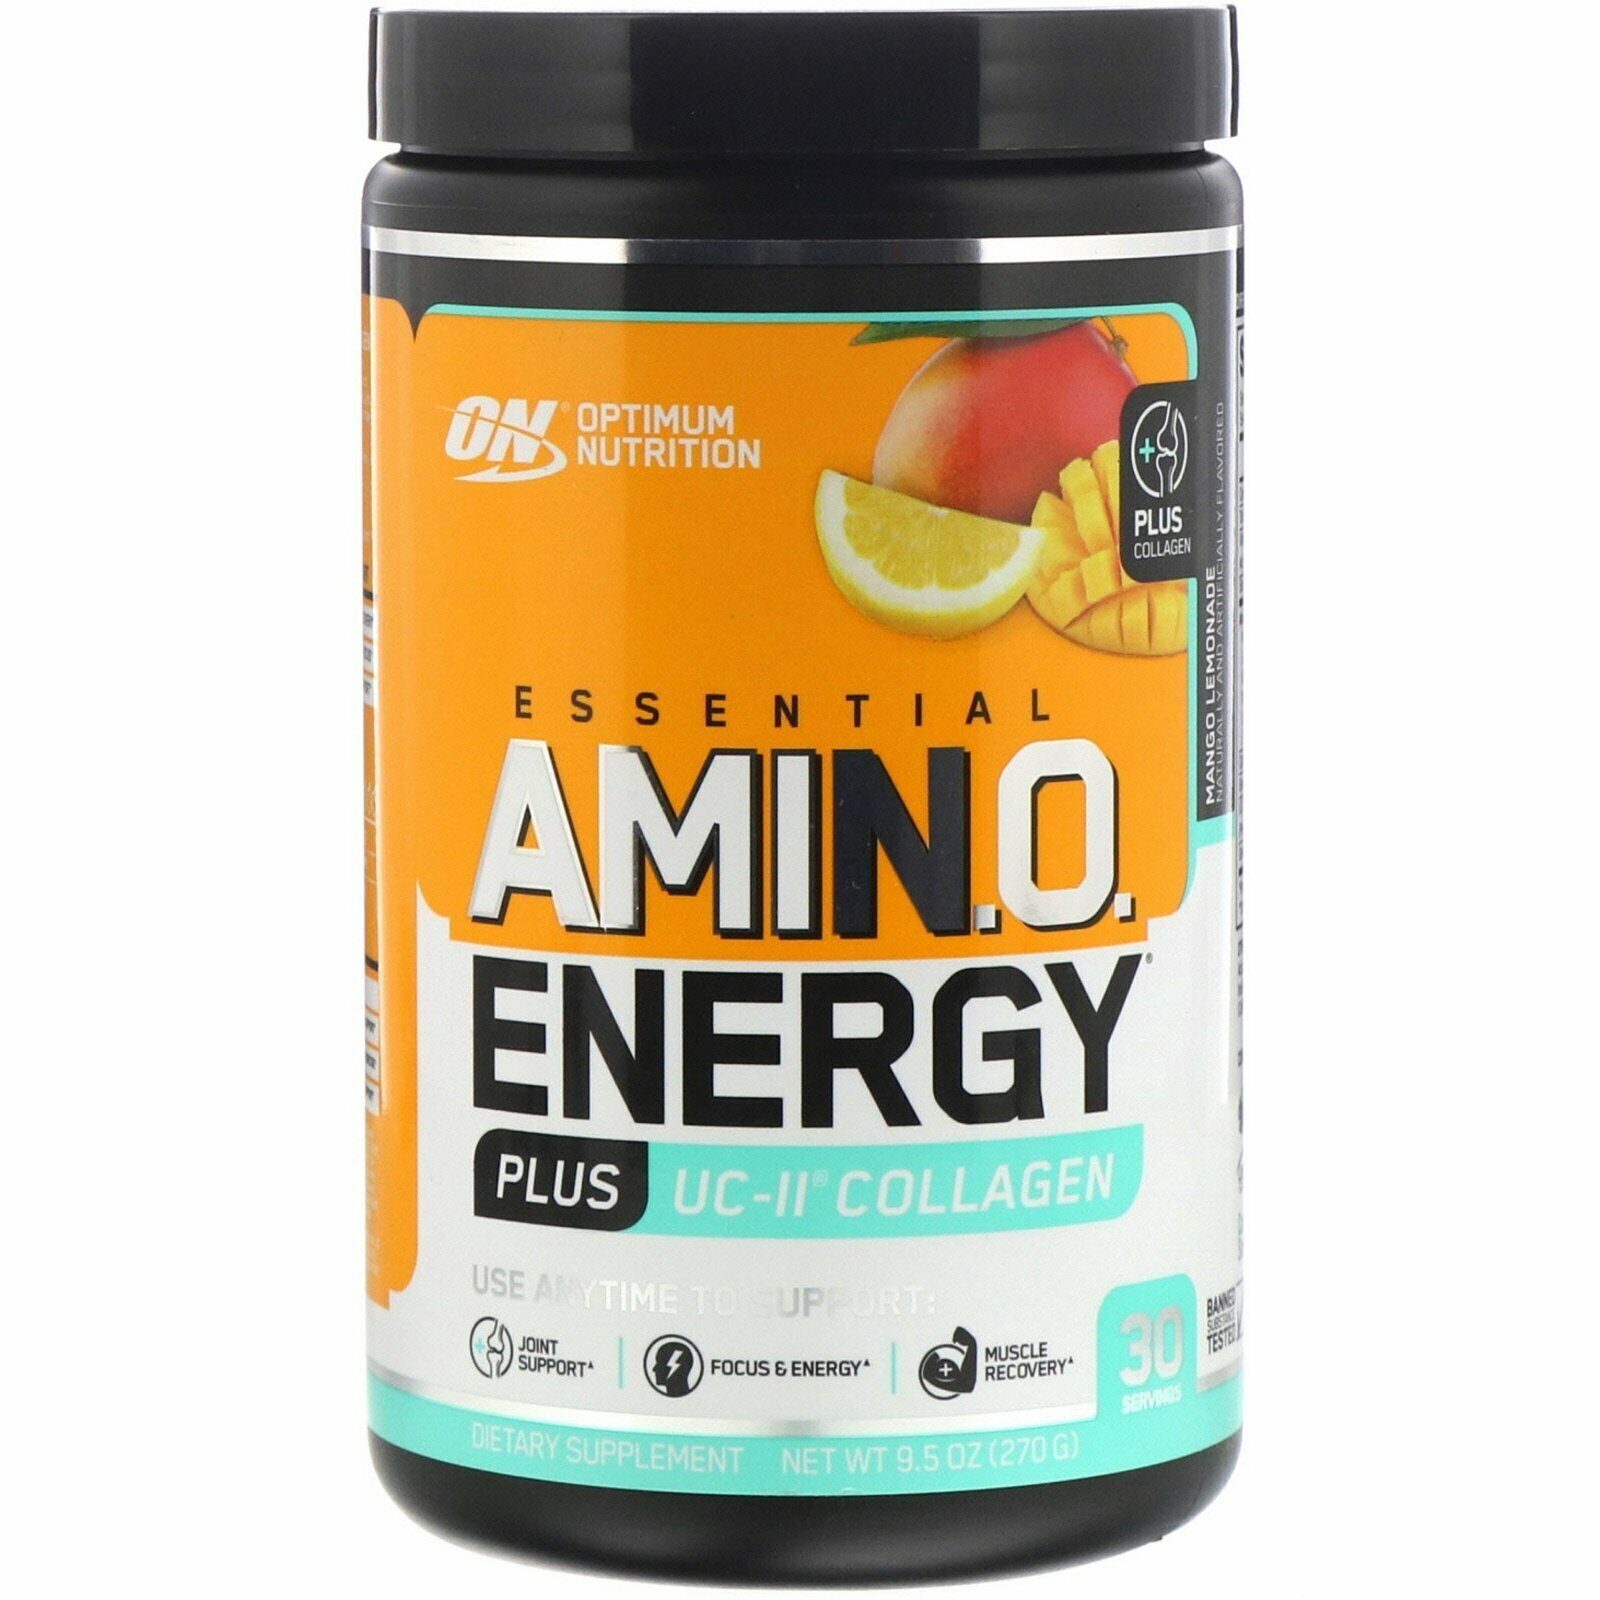 Essential Amino Energy + UC-II COLLAGEN 270 г  по низкой цене в .